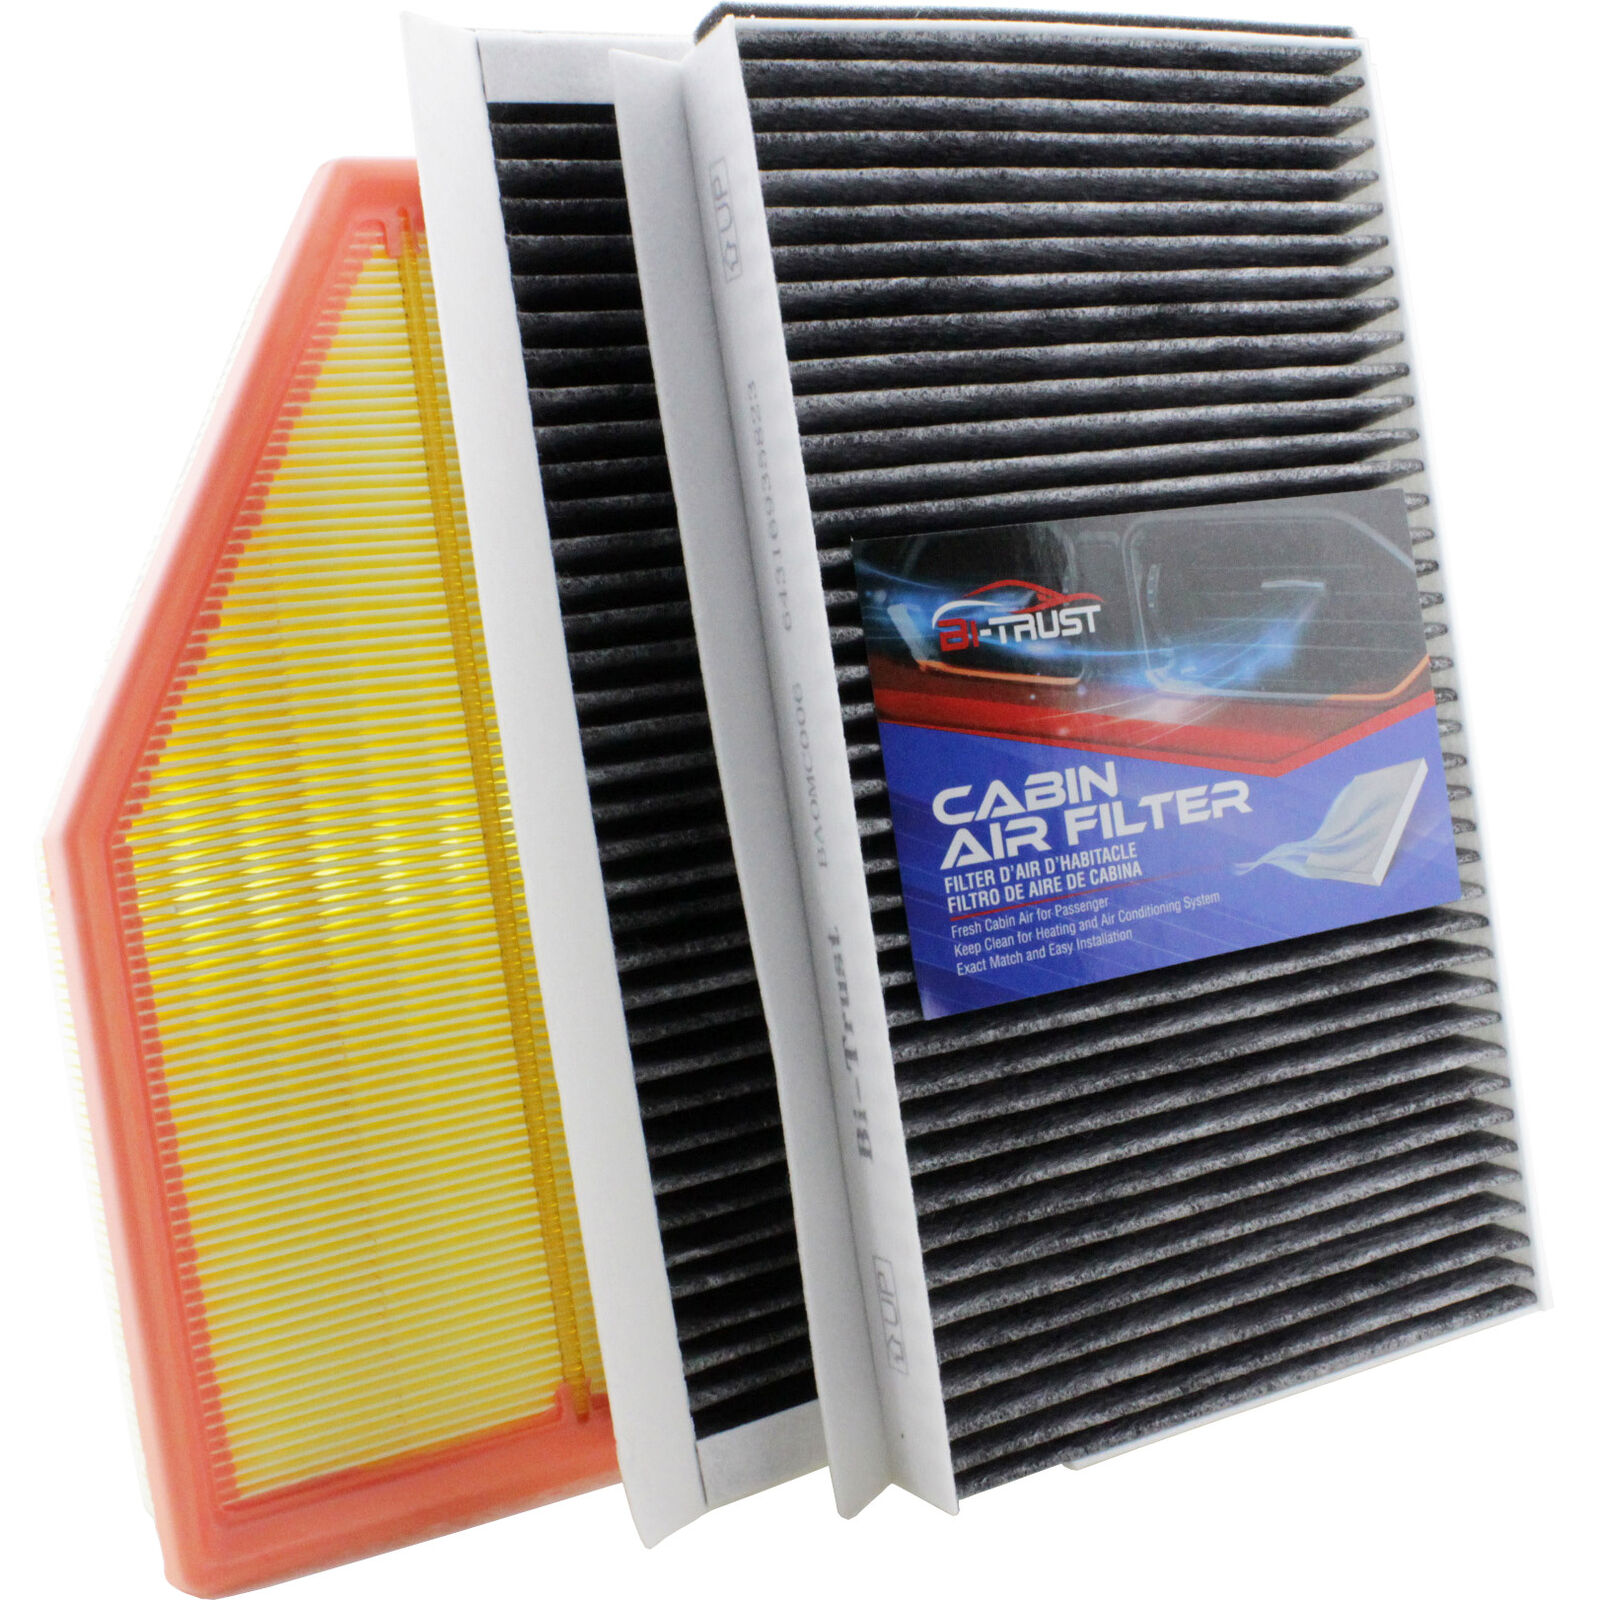 Engine Cabin Air Filter Kit for BMW 525I 525XI 528I 528XI 530I 530XI 545I